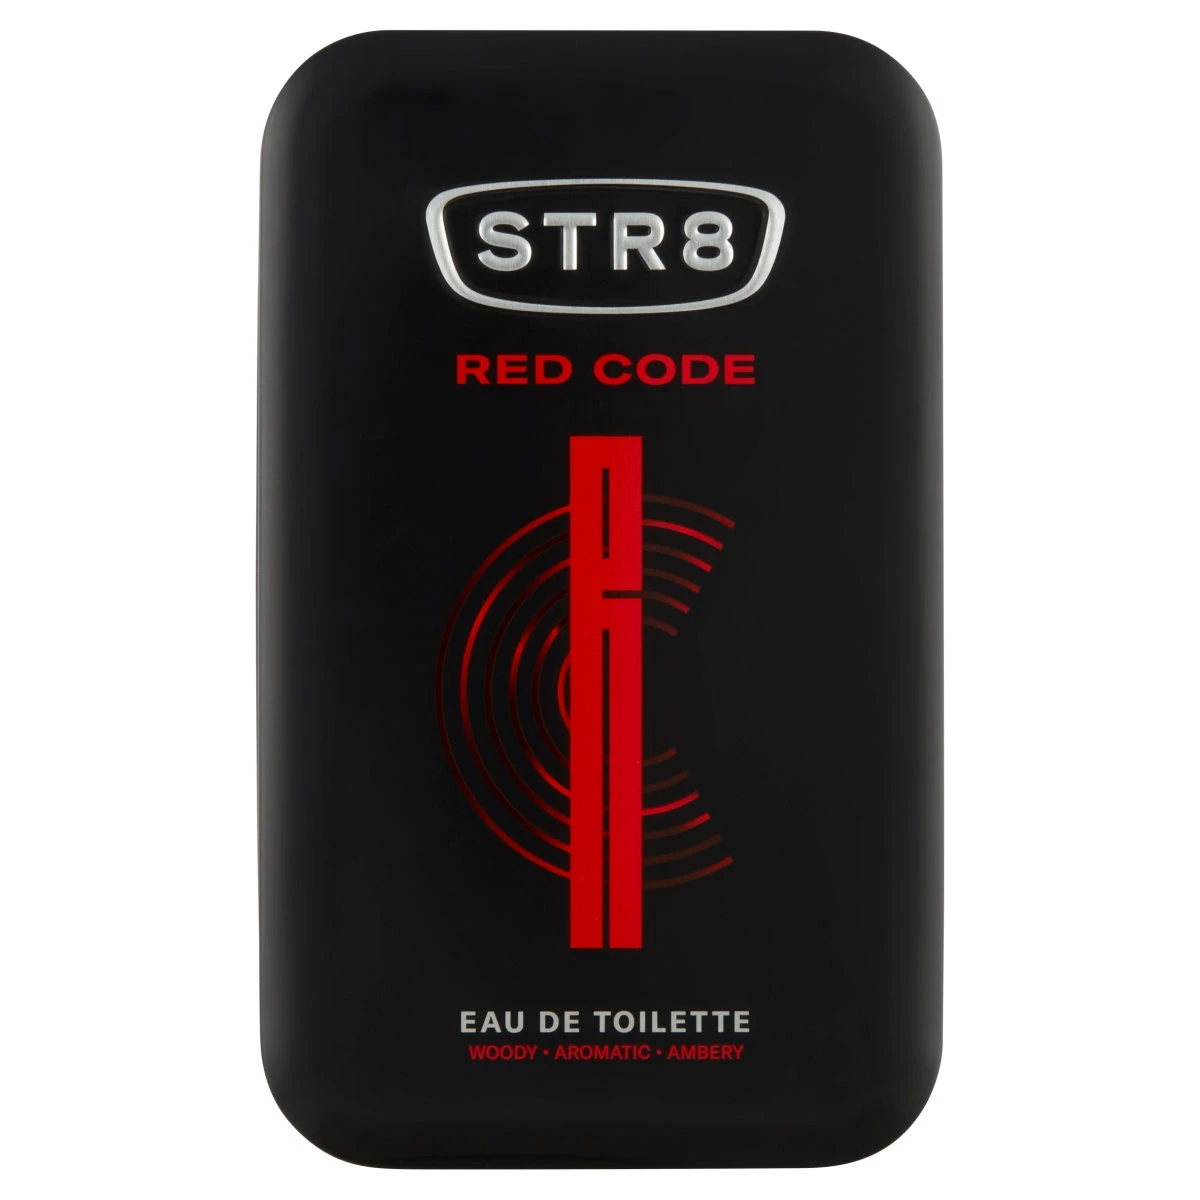 STR8 Red Code eau de toilette 50 ml